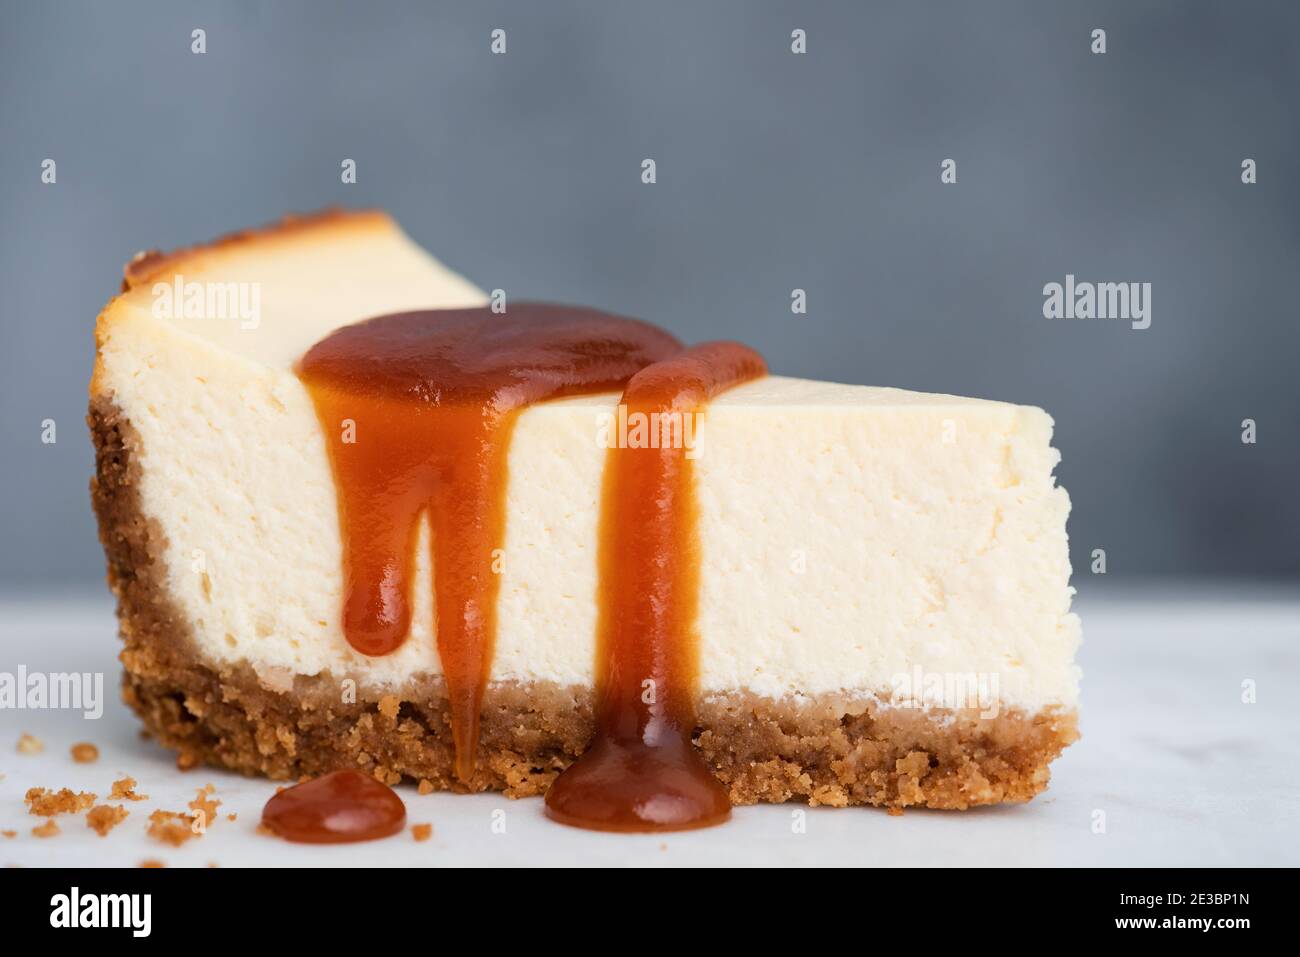 Tarta de queso con salsa de caramelo salado, Vista de primer plano Foto de stock